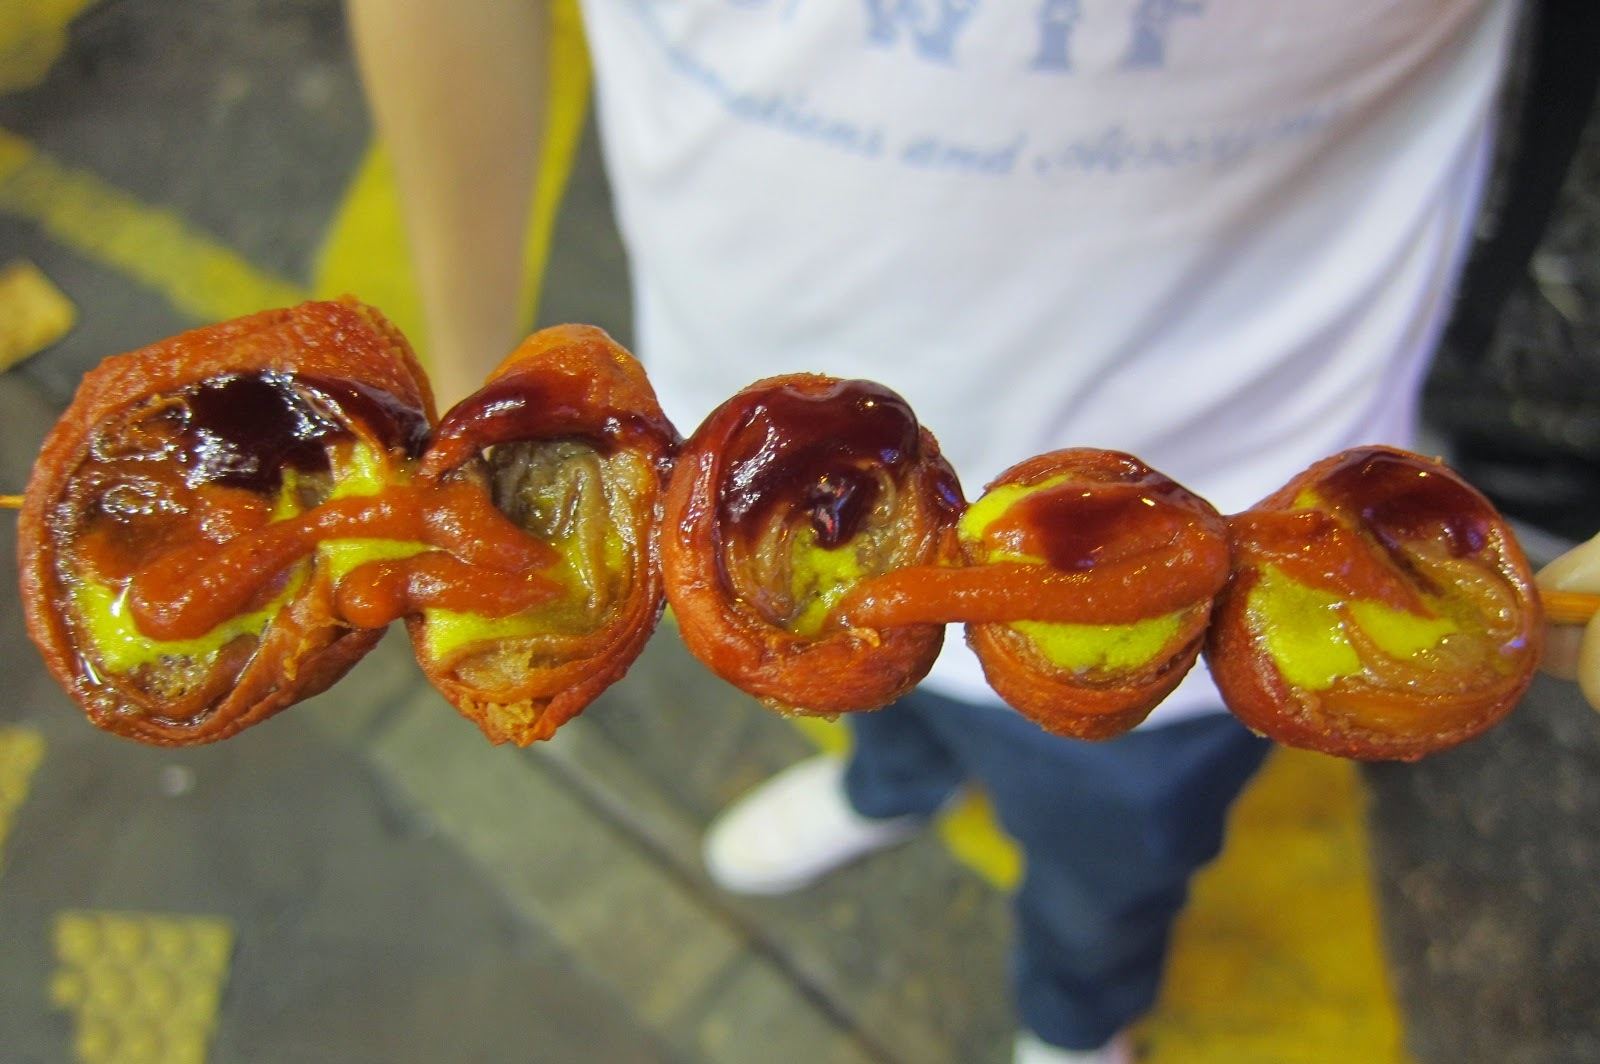 Hong Kong streetfood fried pork intestine